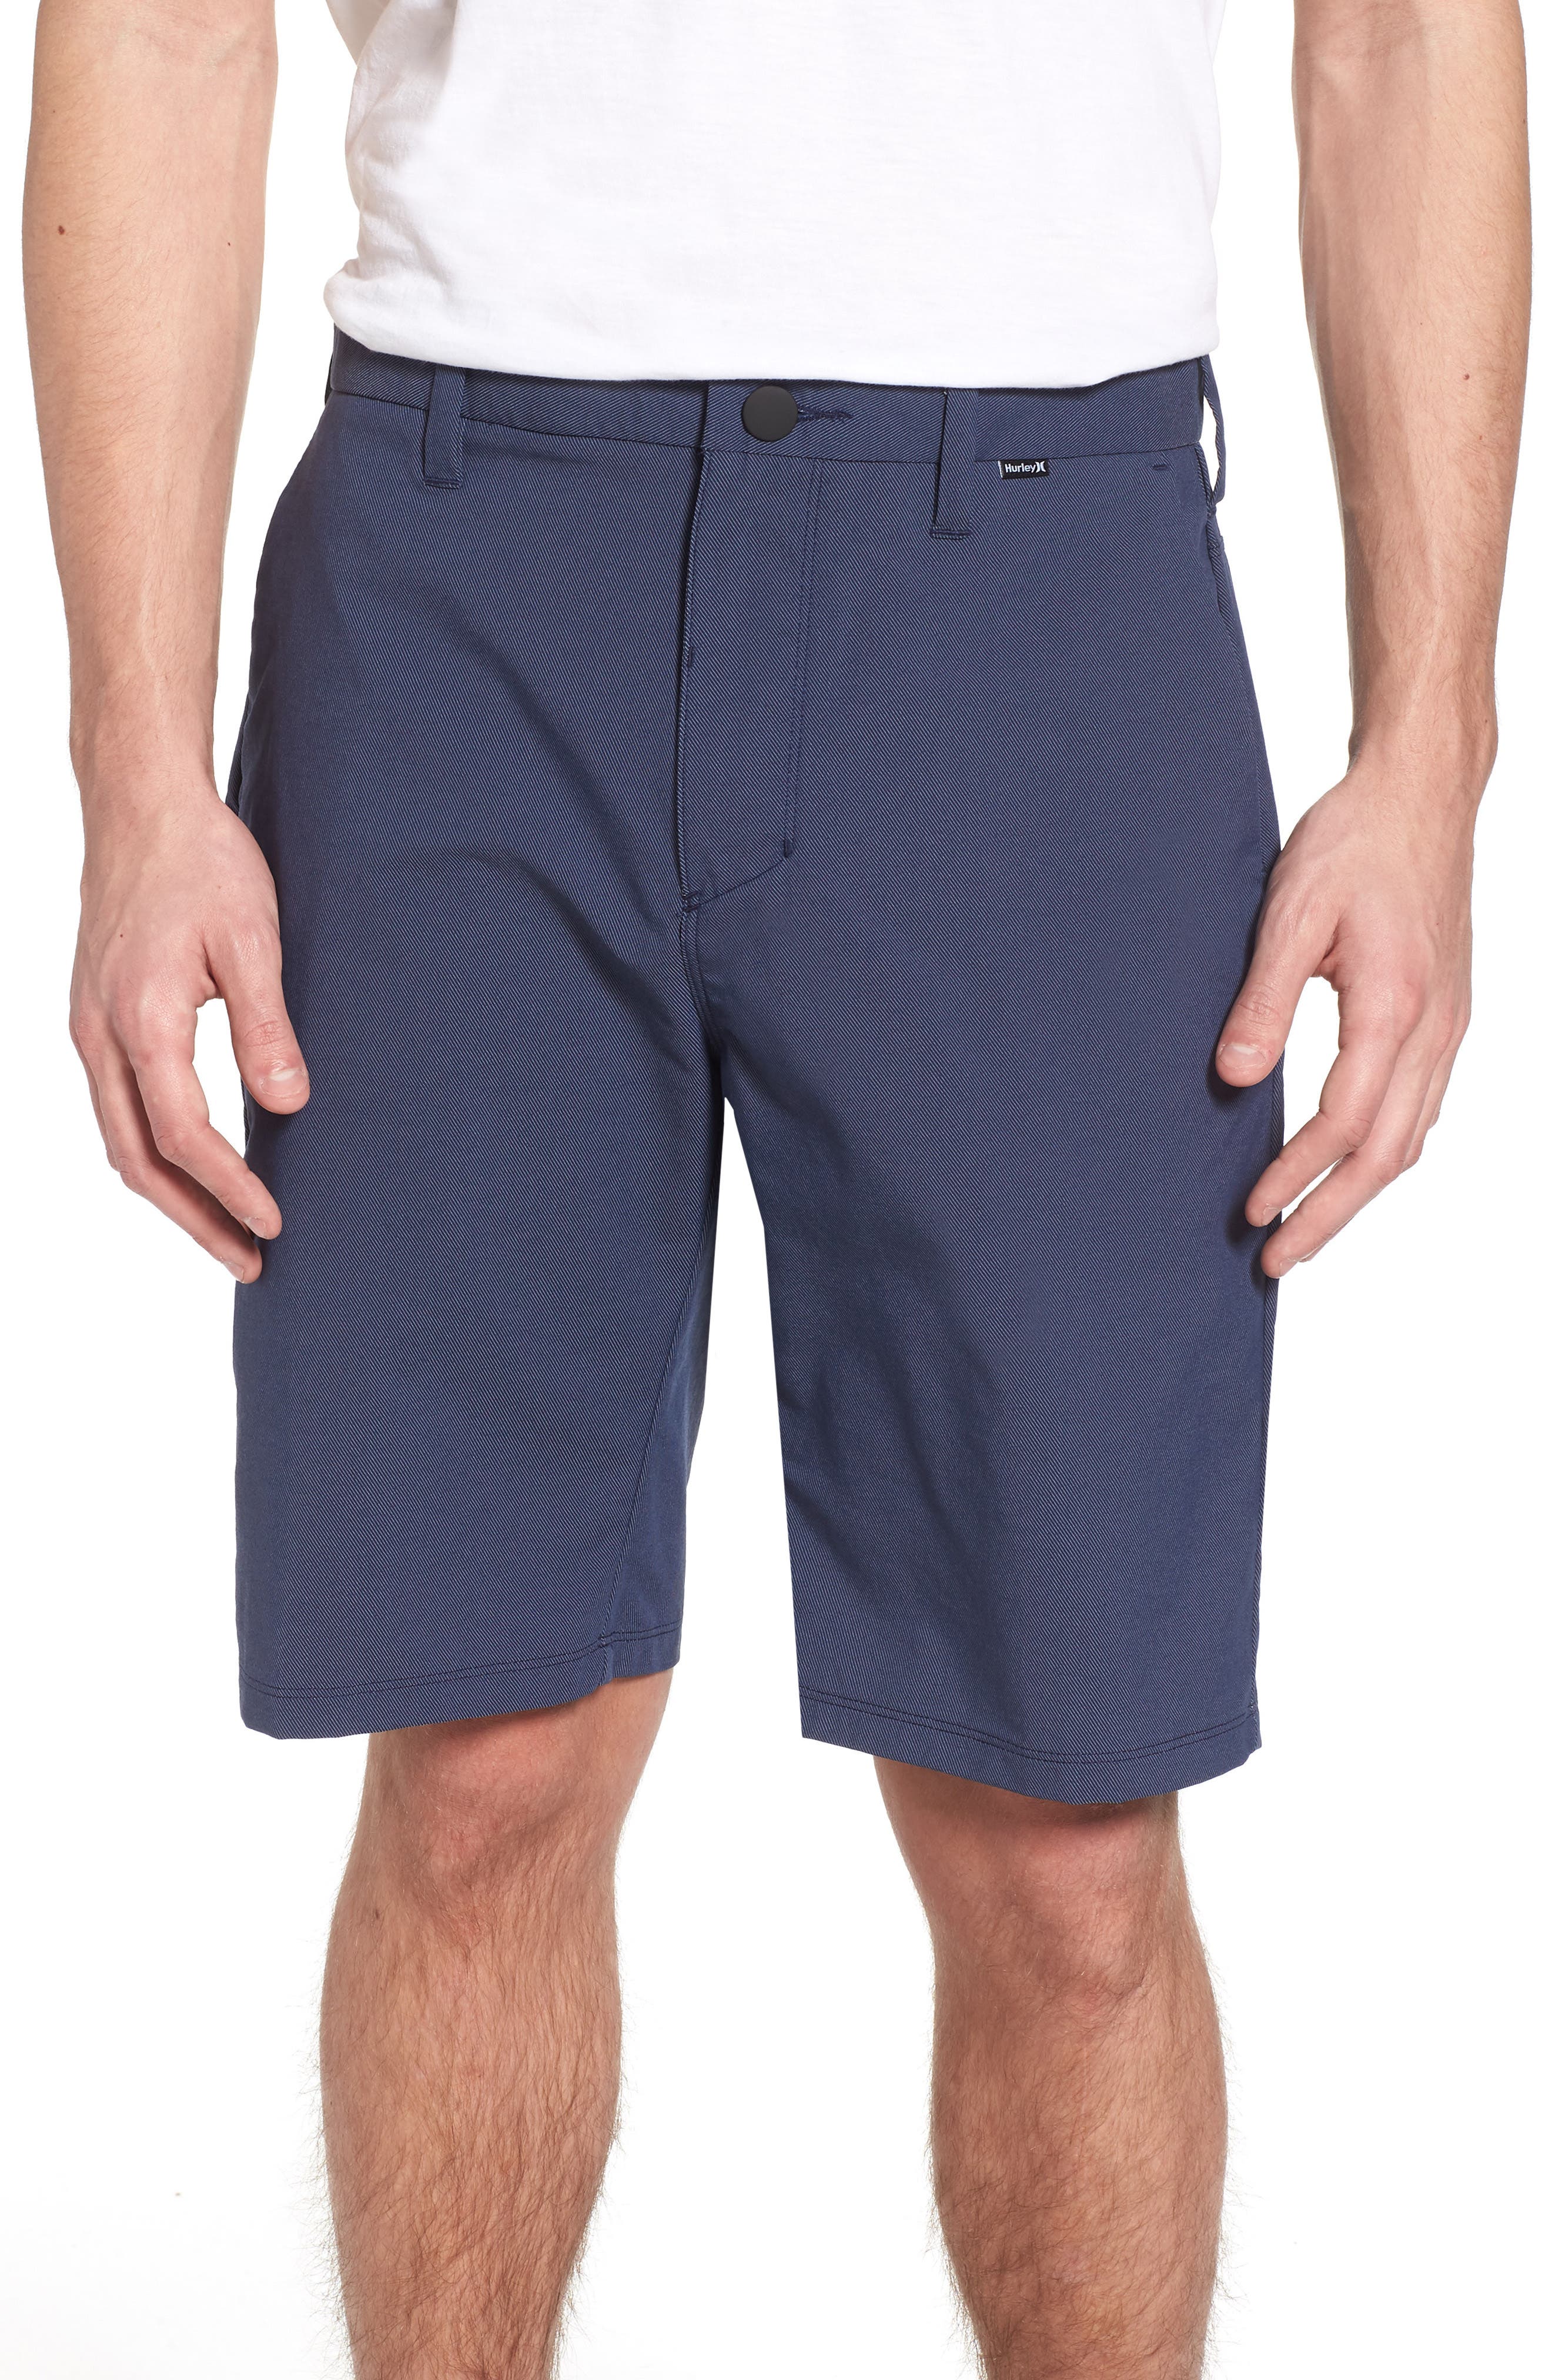 mens cargo shorts 15 inch inseam, Men's Shorts | Women's Shorts ...